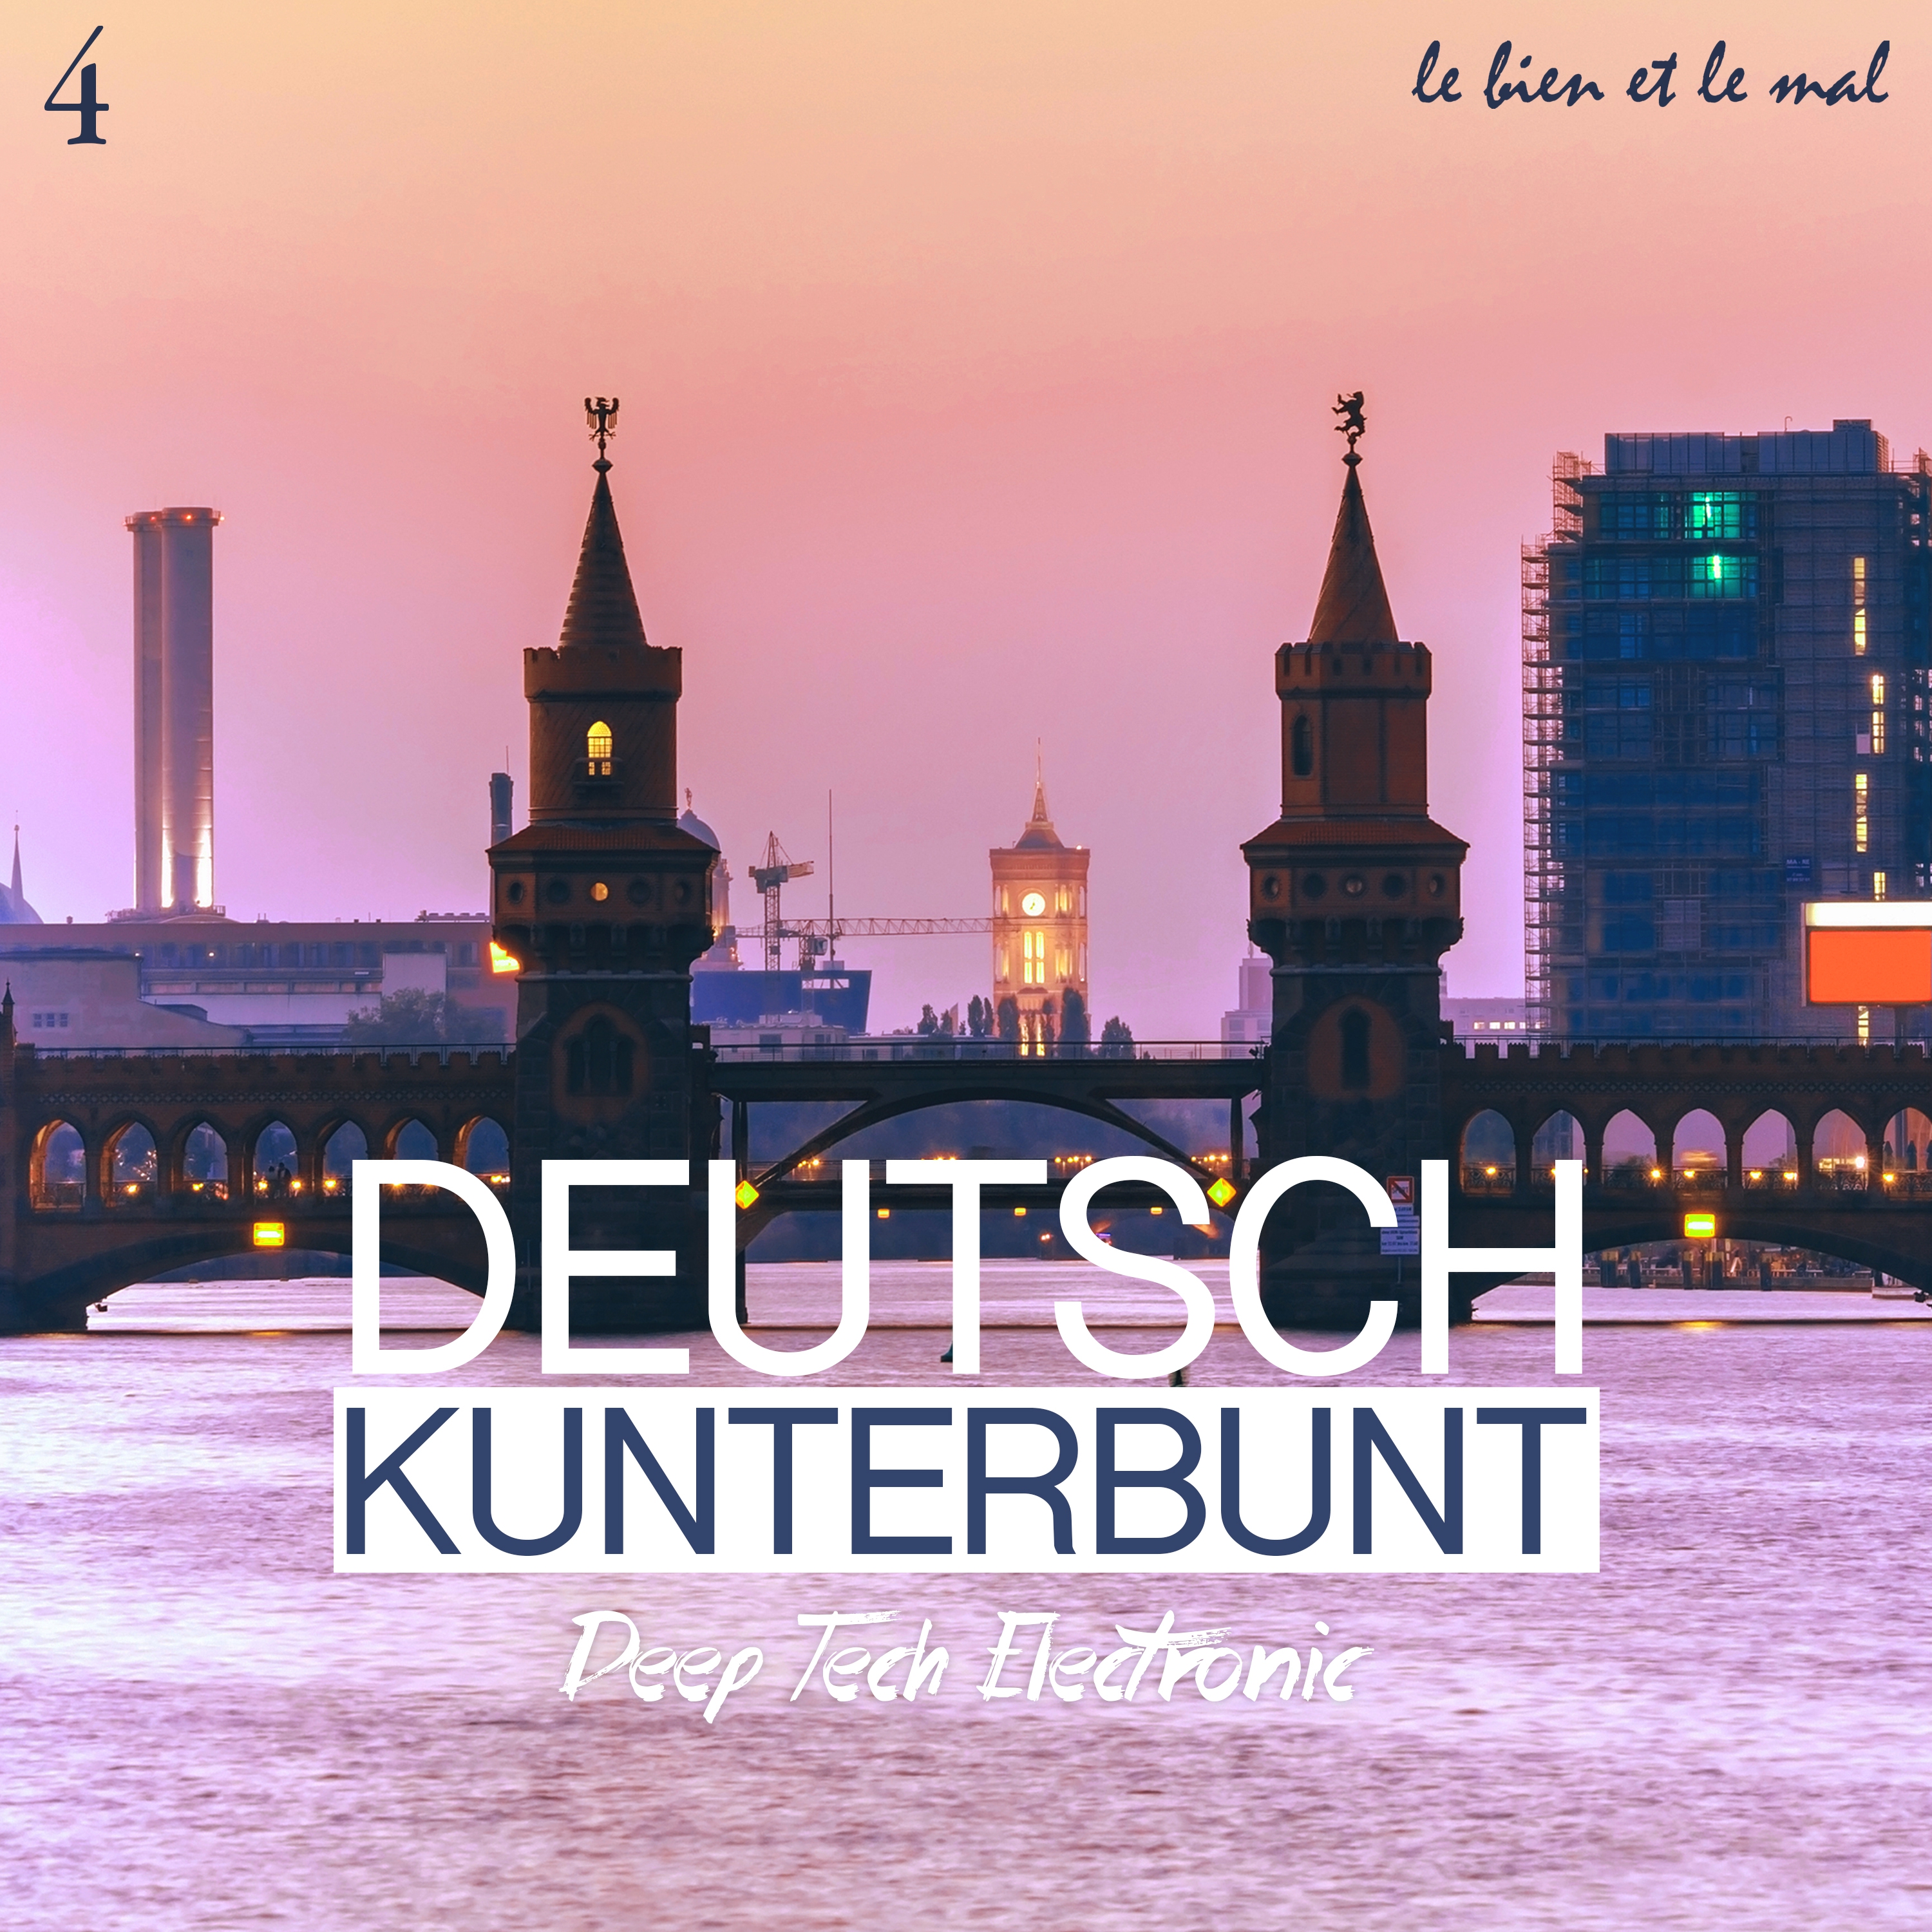 Deutsch Kunterbunt, Vol. 4 - Deep, Tech, Electronic